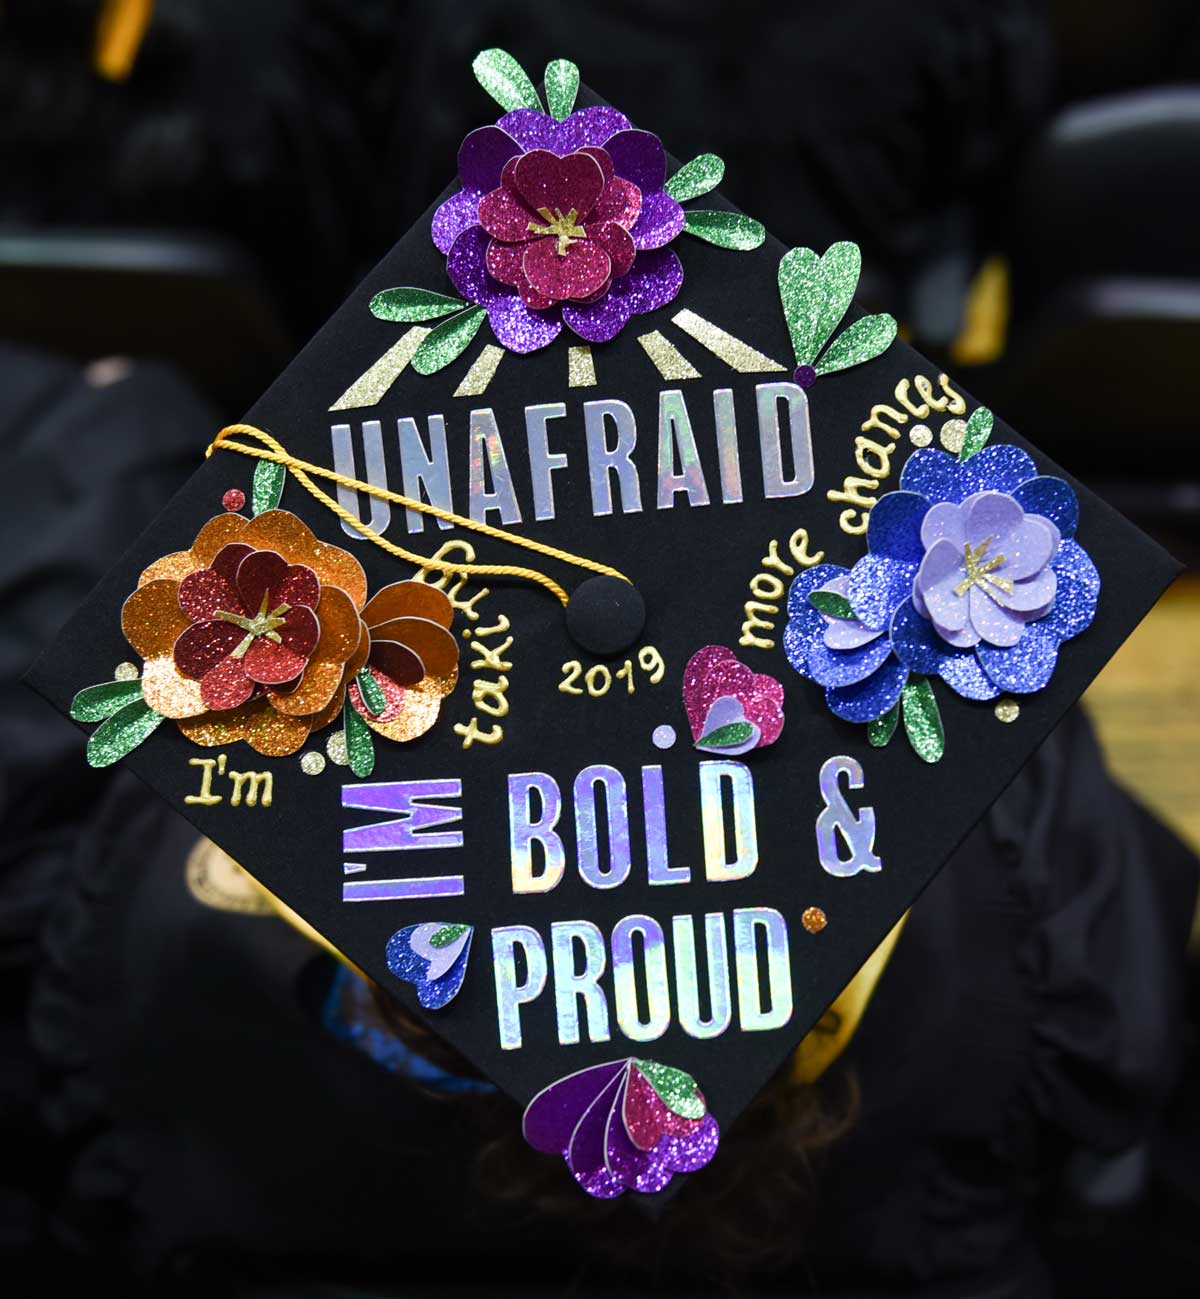 Grad cap decorated with text: Unafraid I'm bold & proud